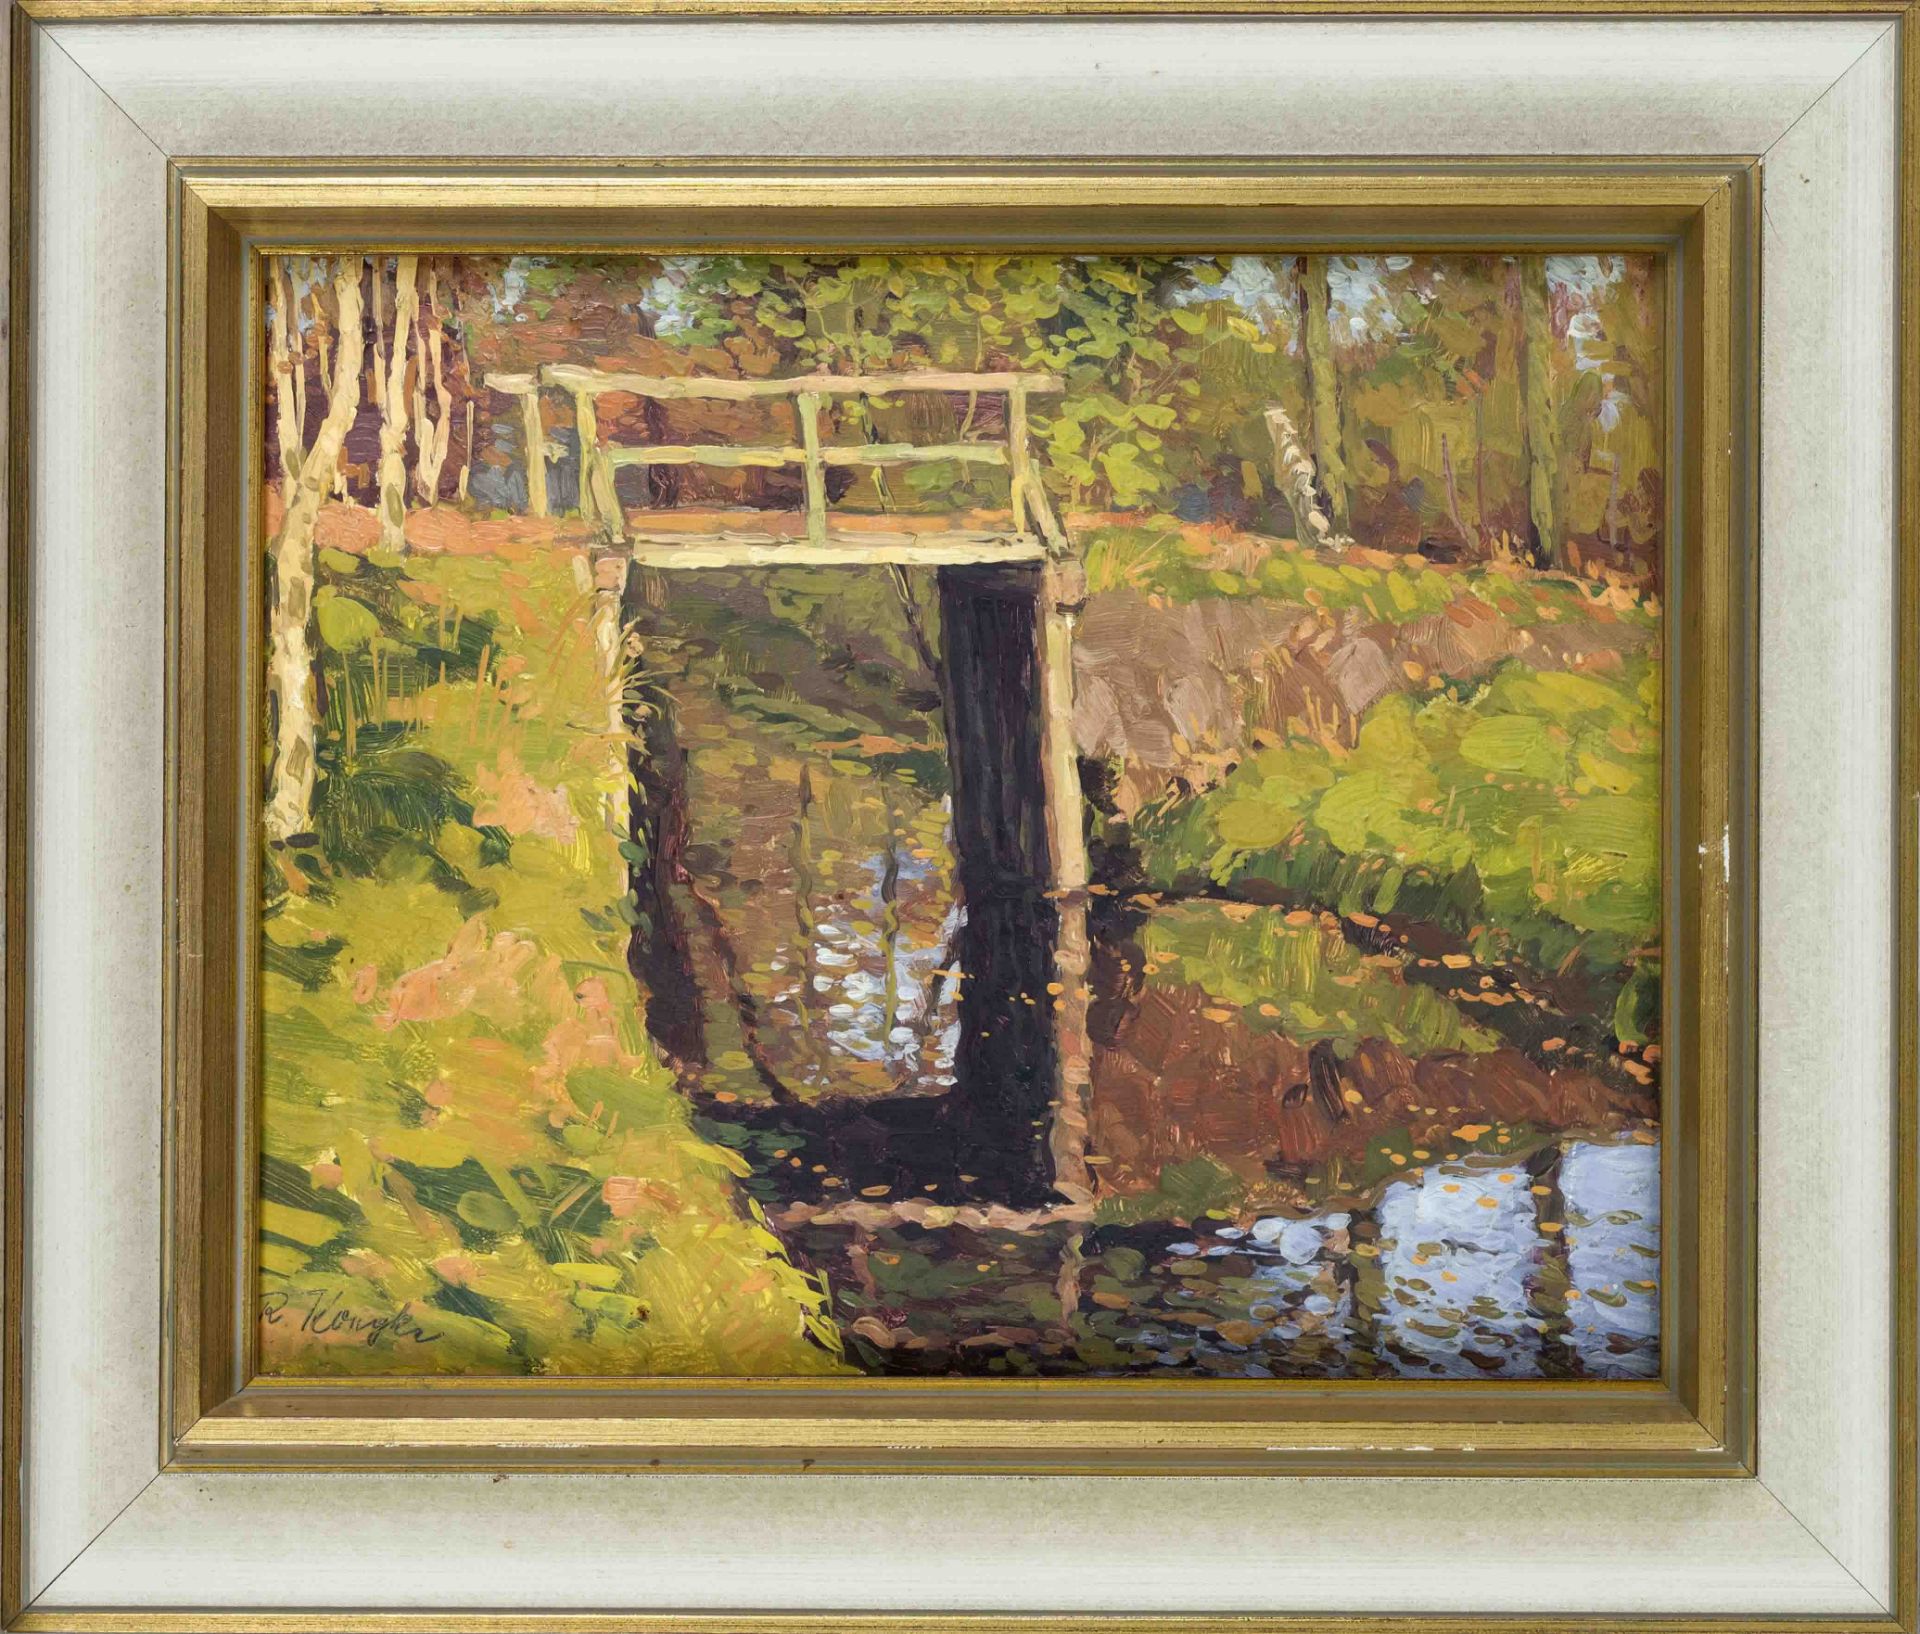 Robert Koepke (1893-1968), Worpswede landscape painter, Bridge in Eickendorf. Oil on panel, signed